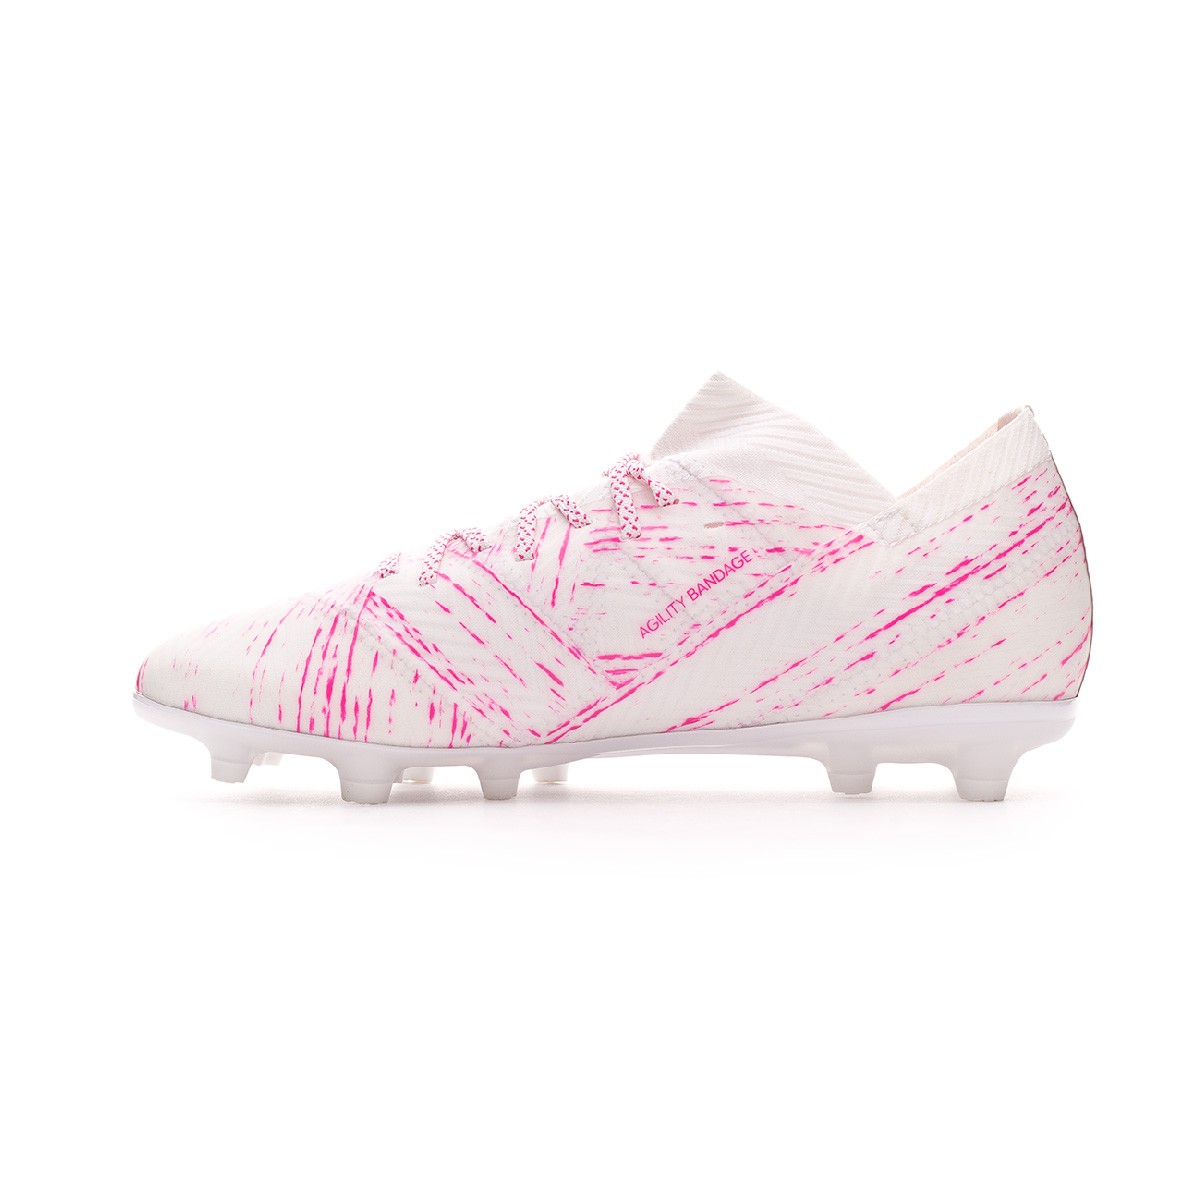 adidas nemeziz white and pink